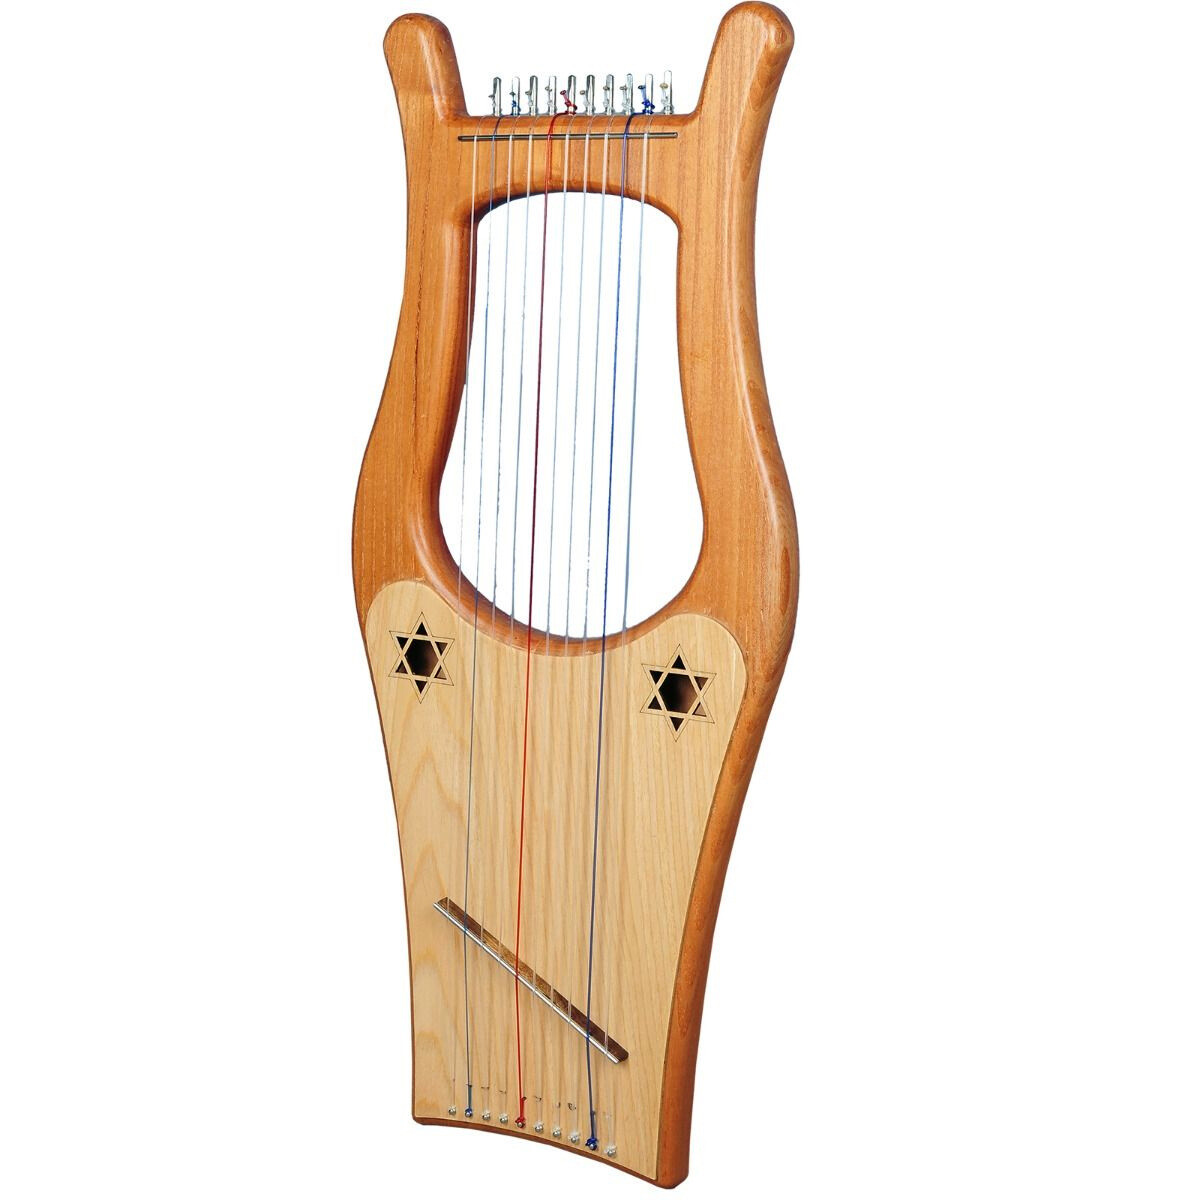 Kinnor Harp large, 10 String, Red Cedar